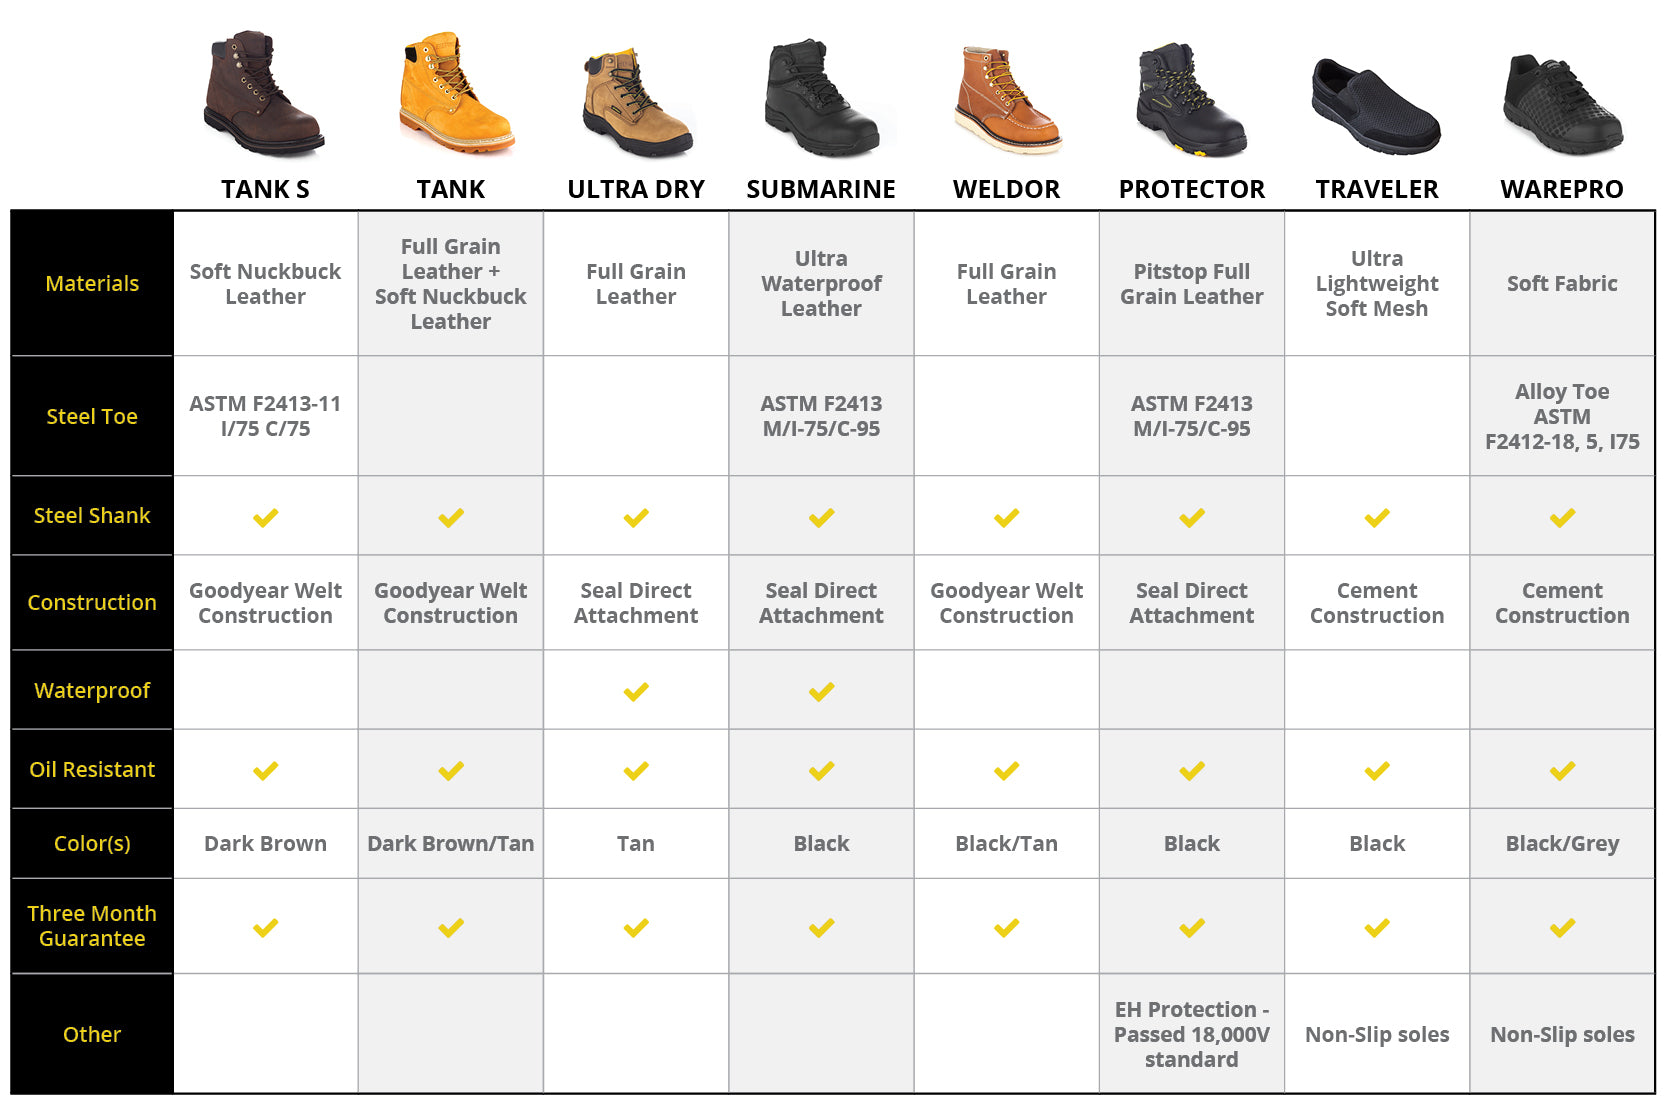 Mini Boots Size Chart